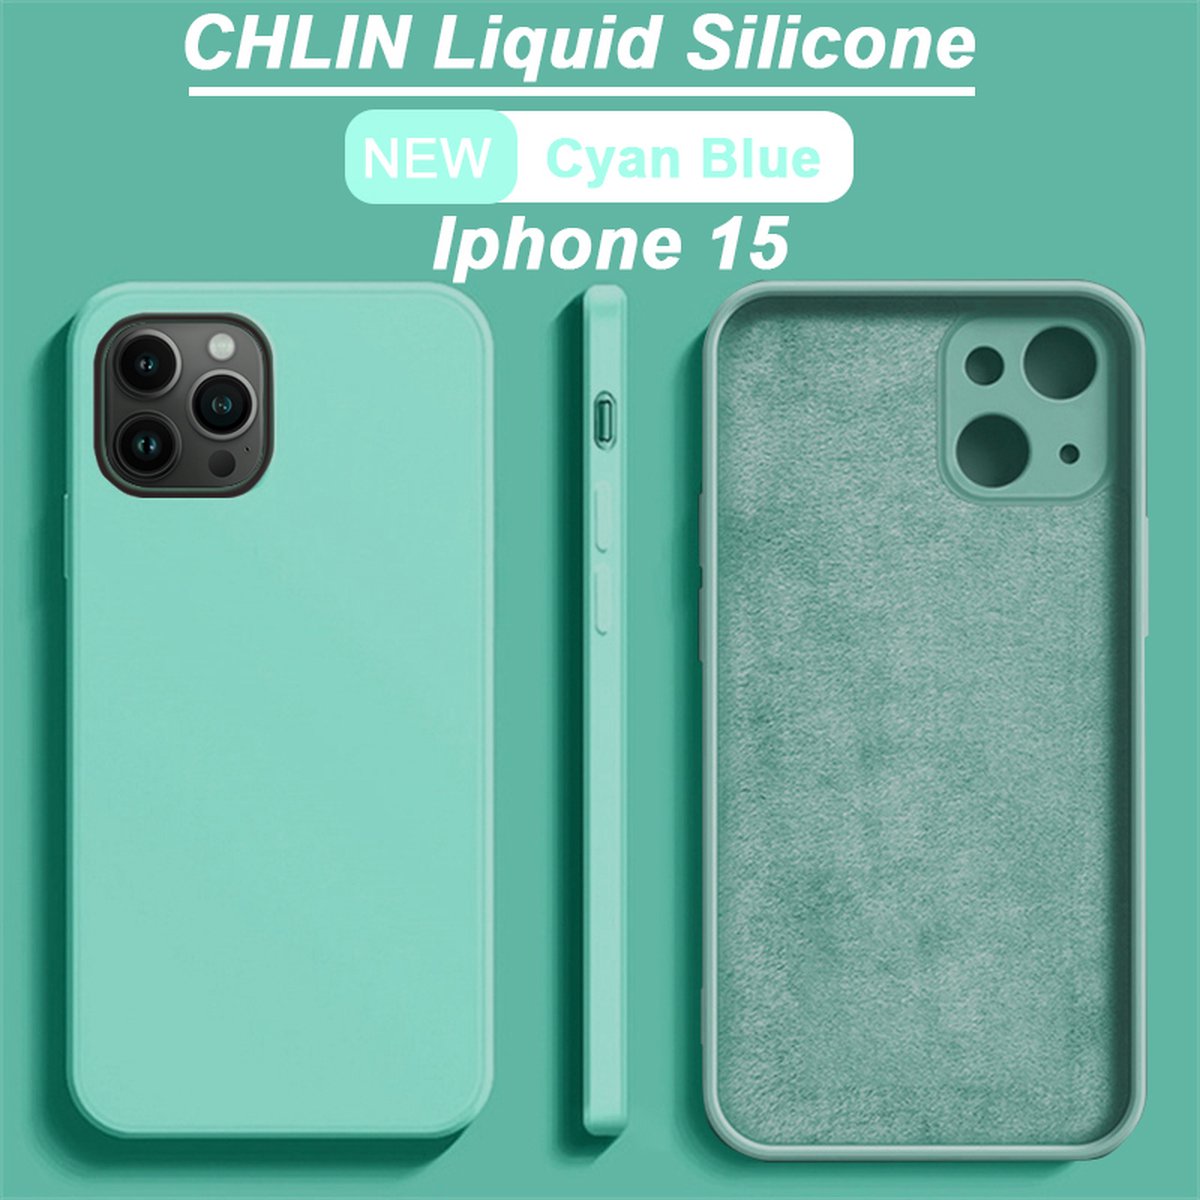 CL CHLIN® Premium Siliconen Case Iphone 15 Blauw - Iphone 15 hoesje - Iphone 15 case - Iphone 15 hoes - Silicone hoesje - Iphone 15 protection - Iphone 15 protector